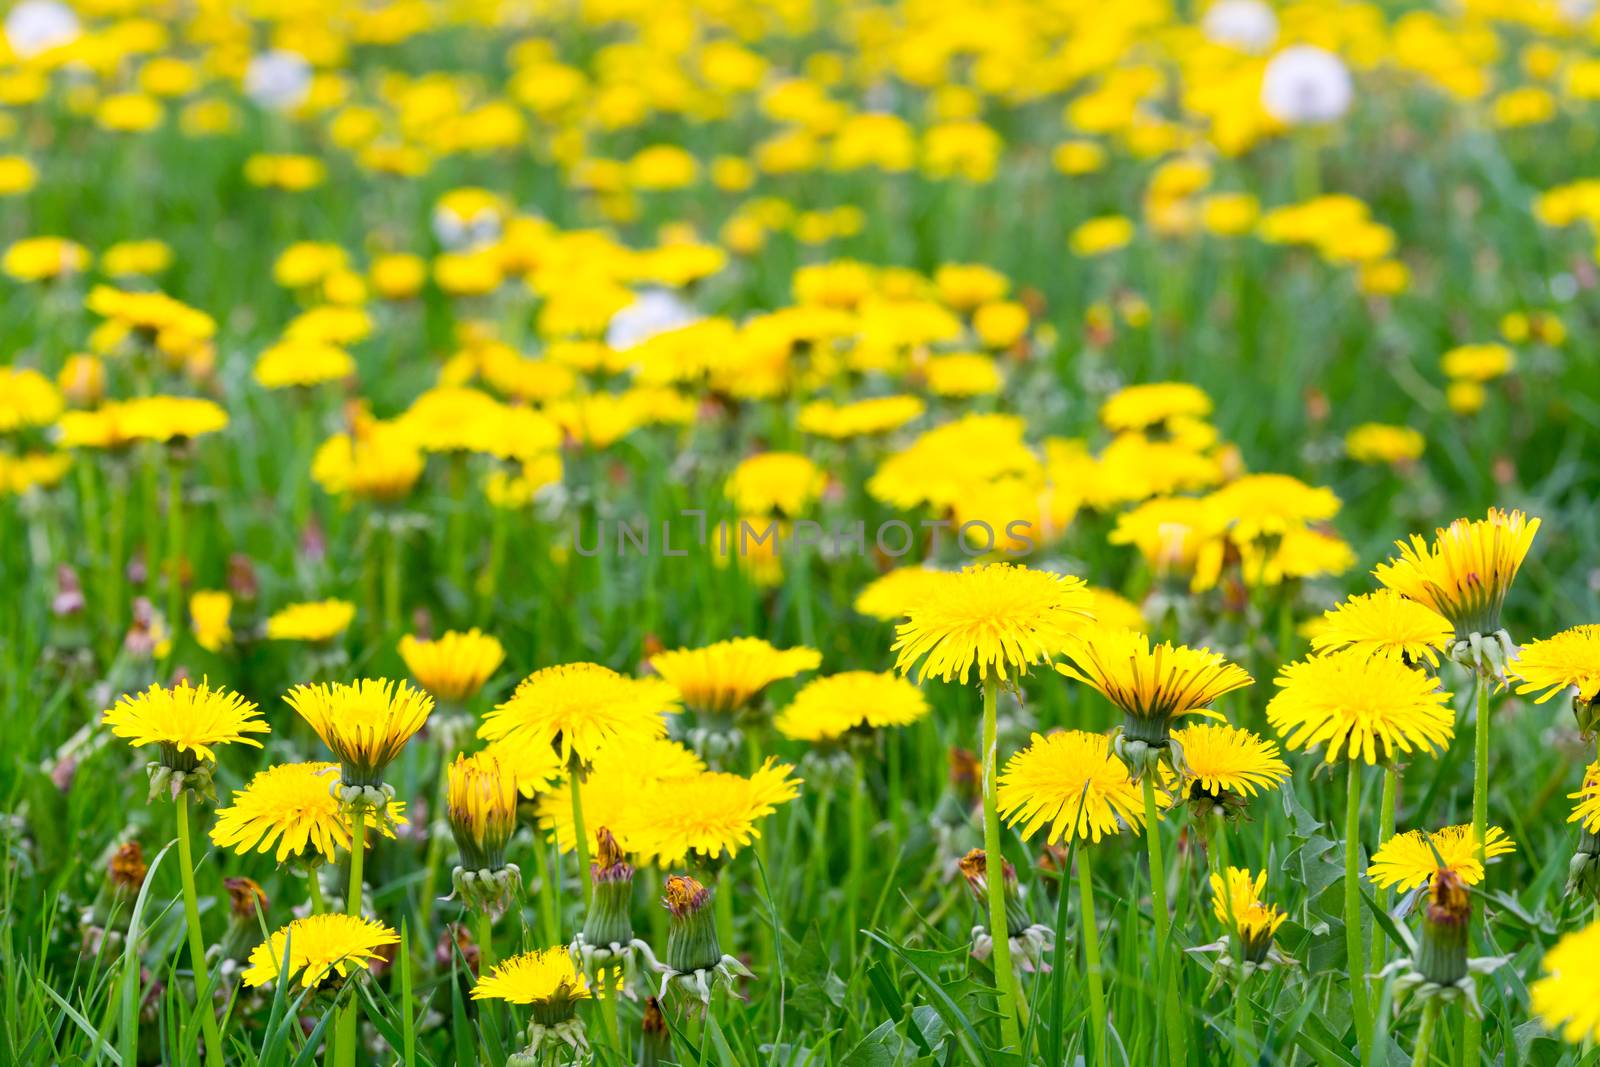 Field of dandelions in grass by BenSchonewille